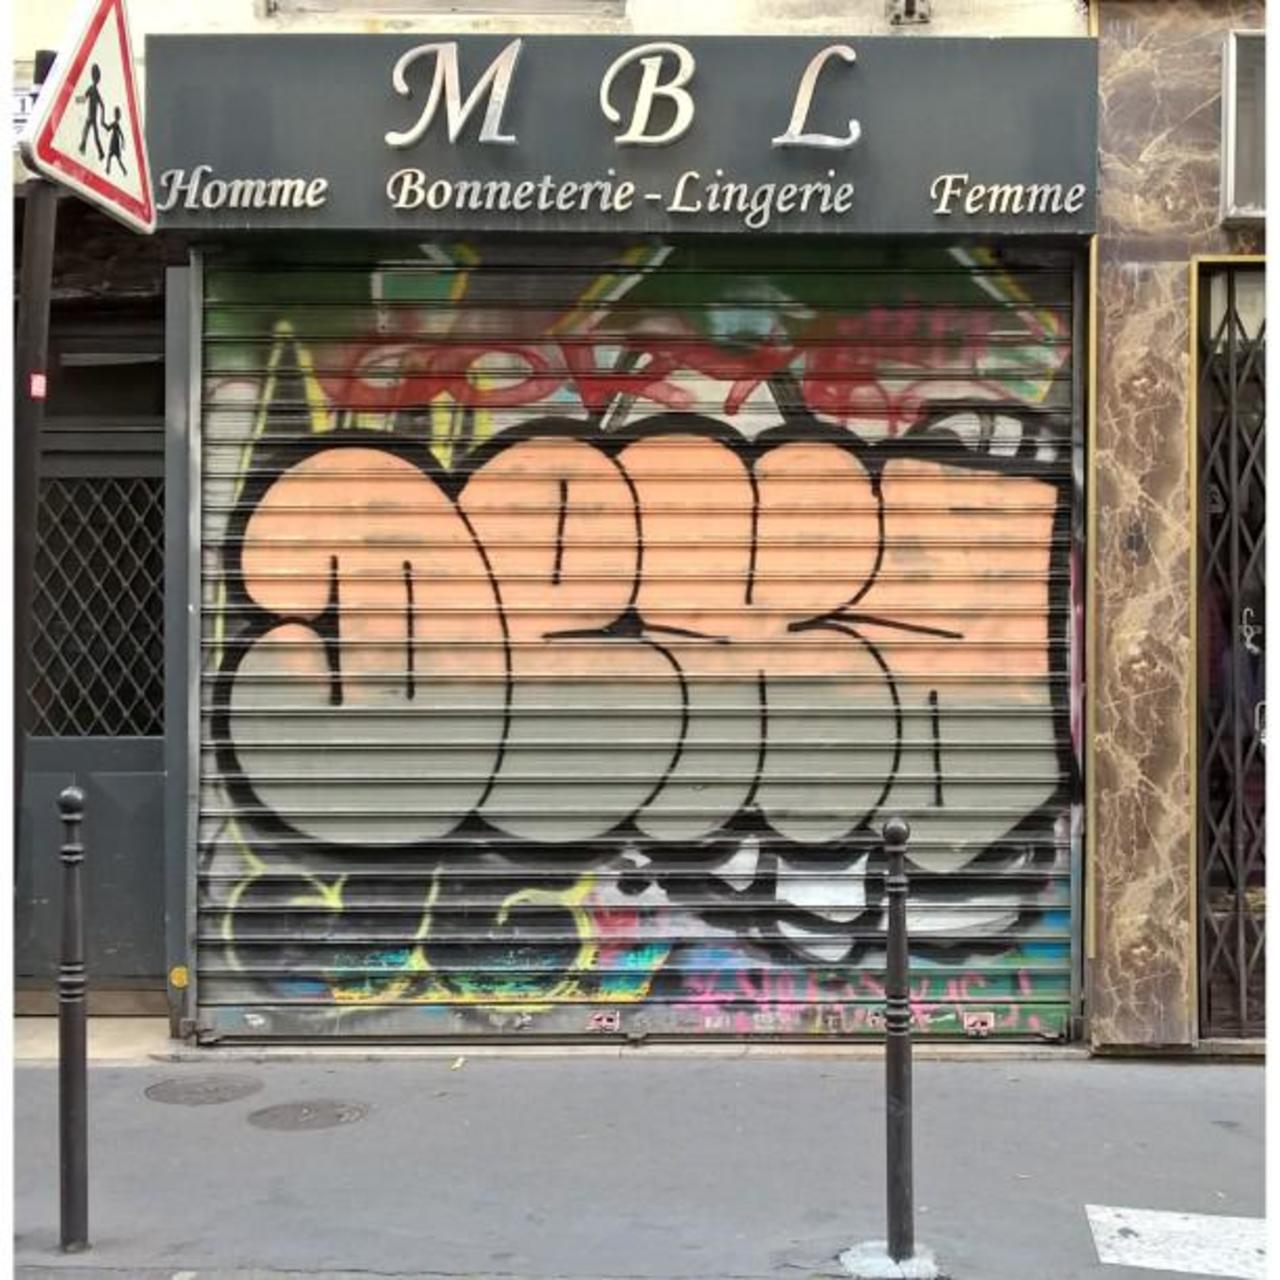 #Paris #graffiti photo by @maxdimontemarciano http://ift.tt/1YK7IMY #StreetArt http://t.co/P1klY81Z4g